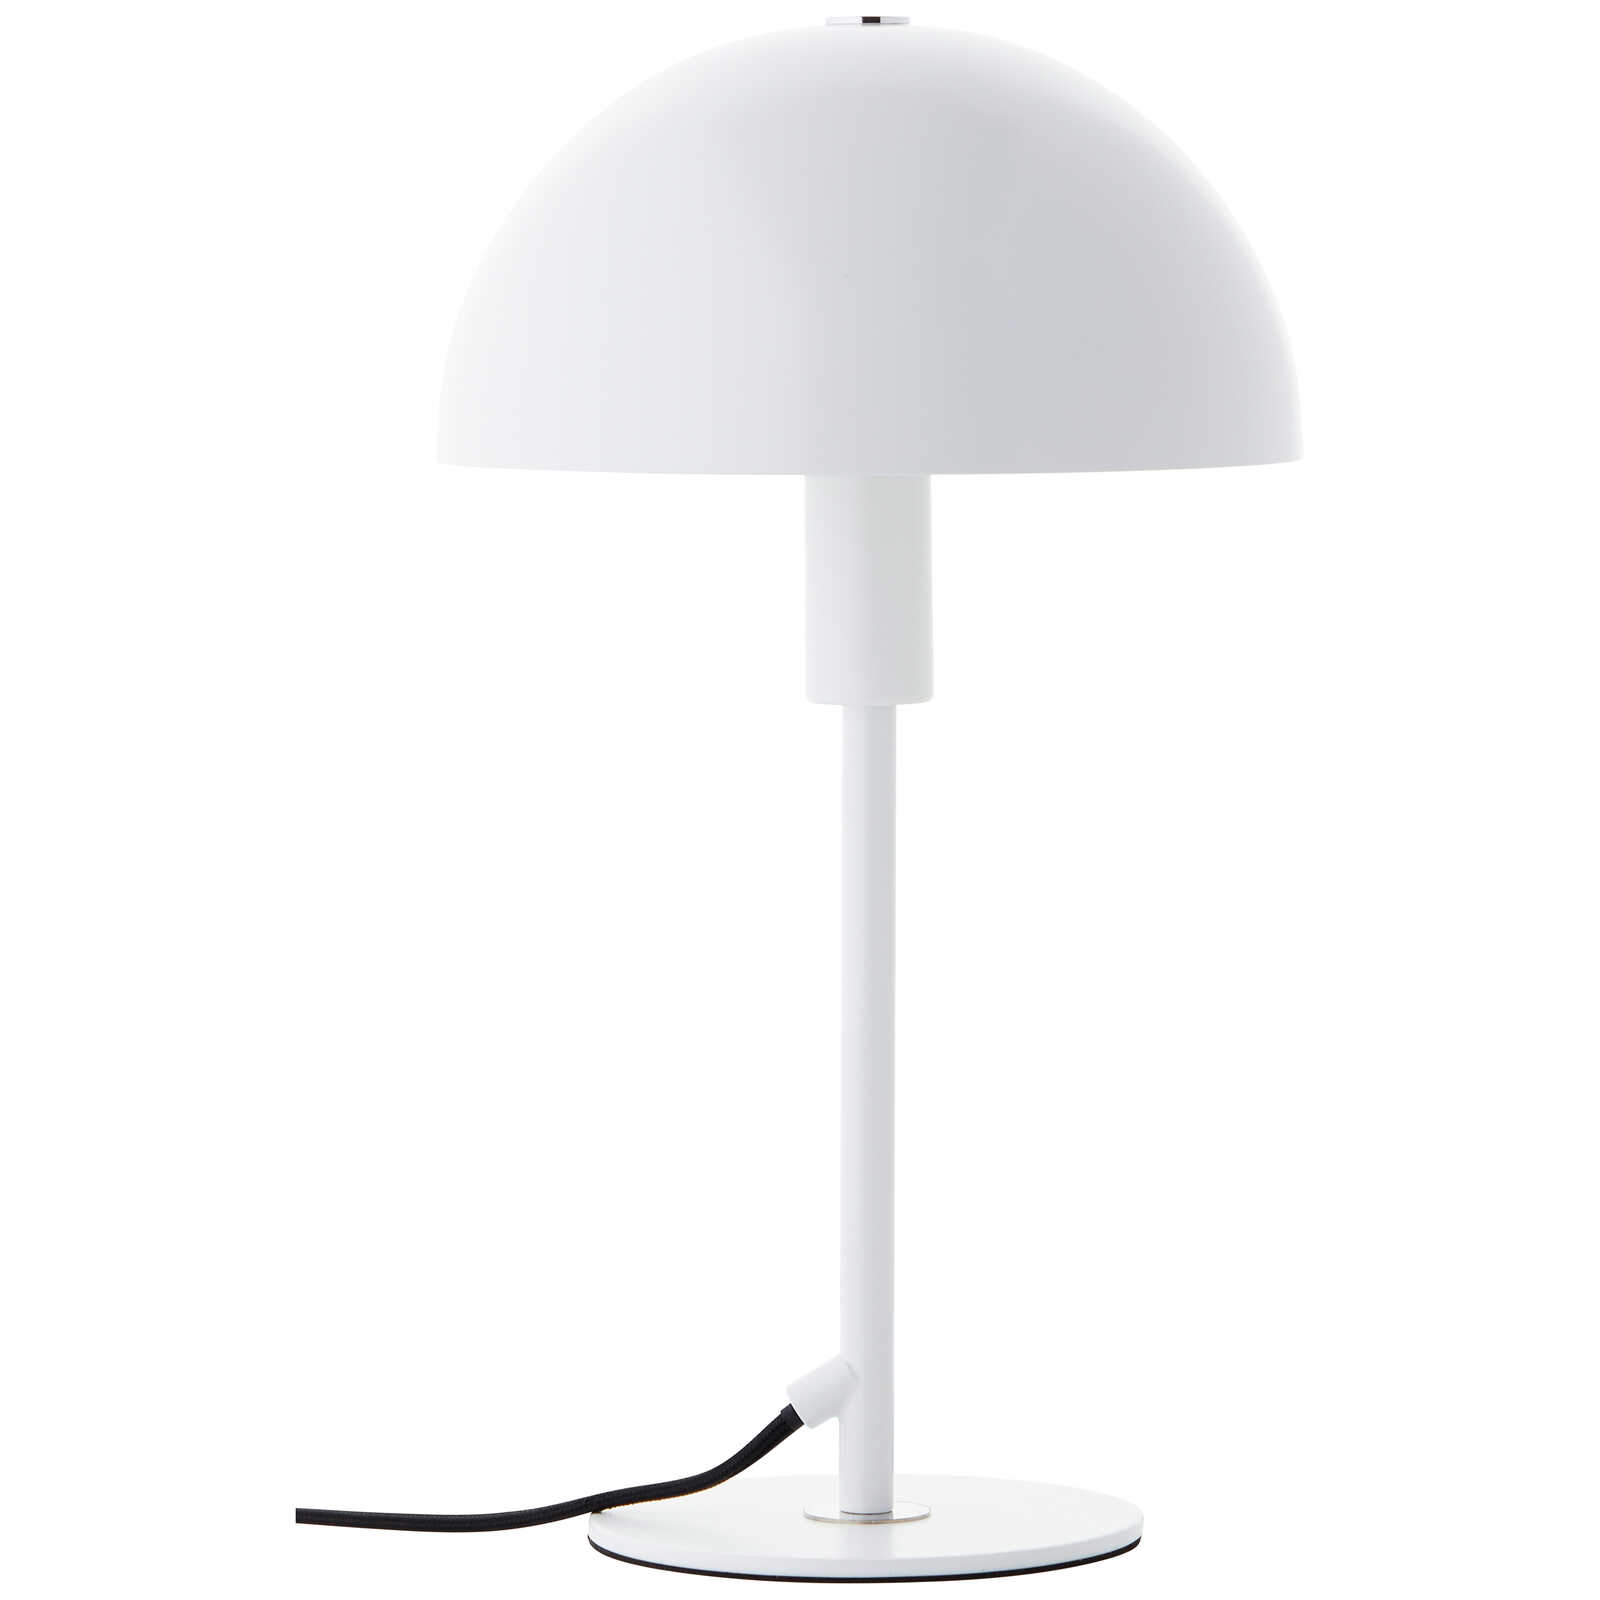             Lampe de table en métal - Lasse 3 - Blanc
        